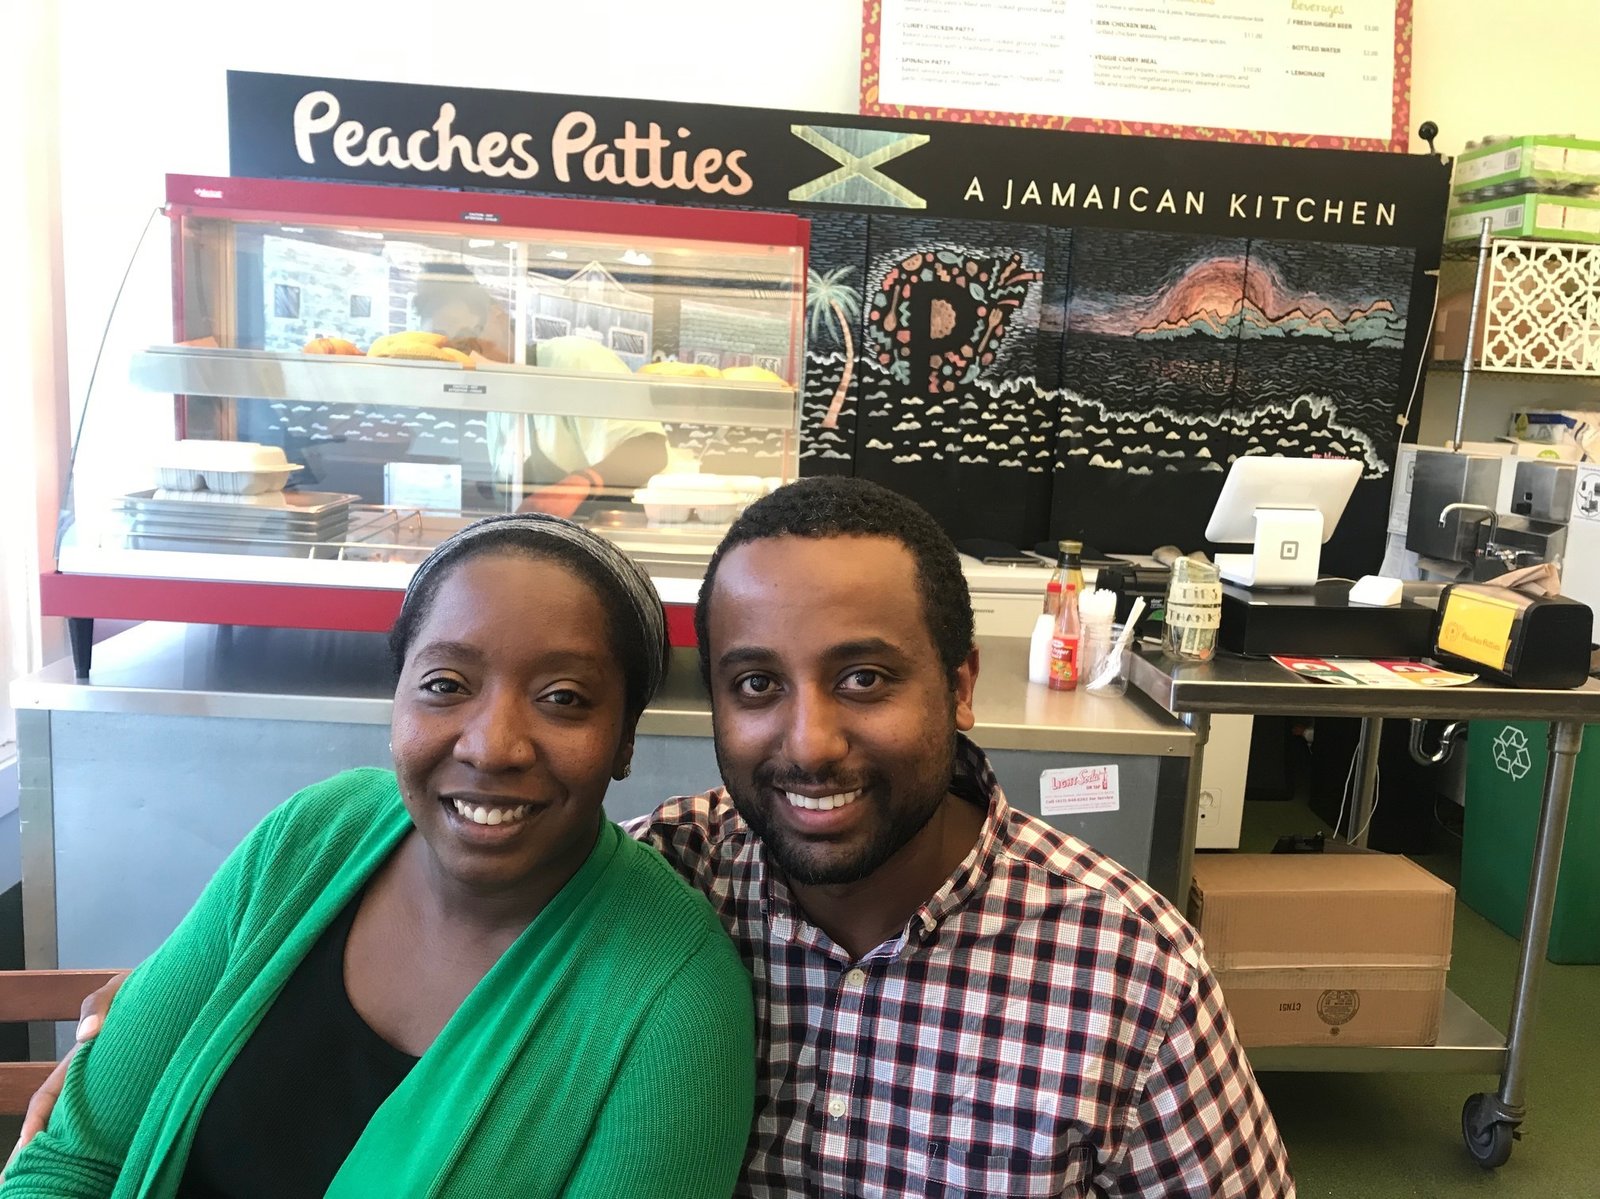 Shani Jones and her husband, Yeheyis Bedada, sell Jamaican patties at their kiosk in San Francisco's Bernal Heights neighborhood.